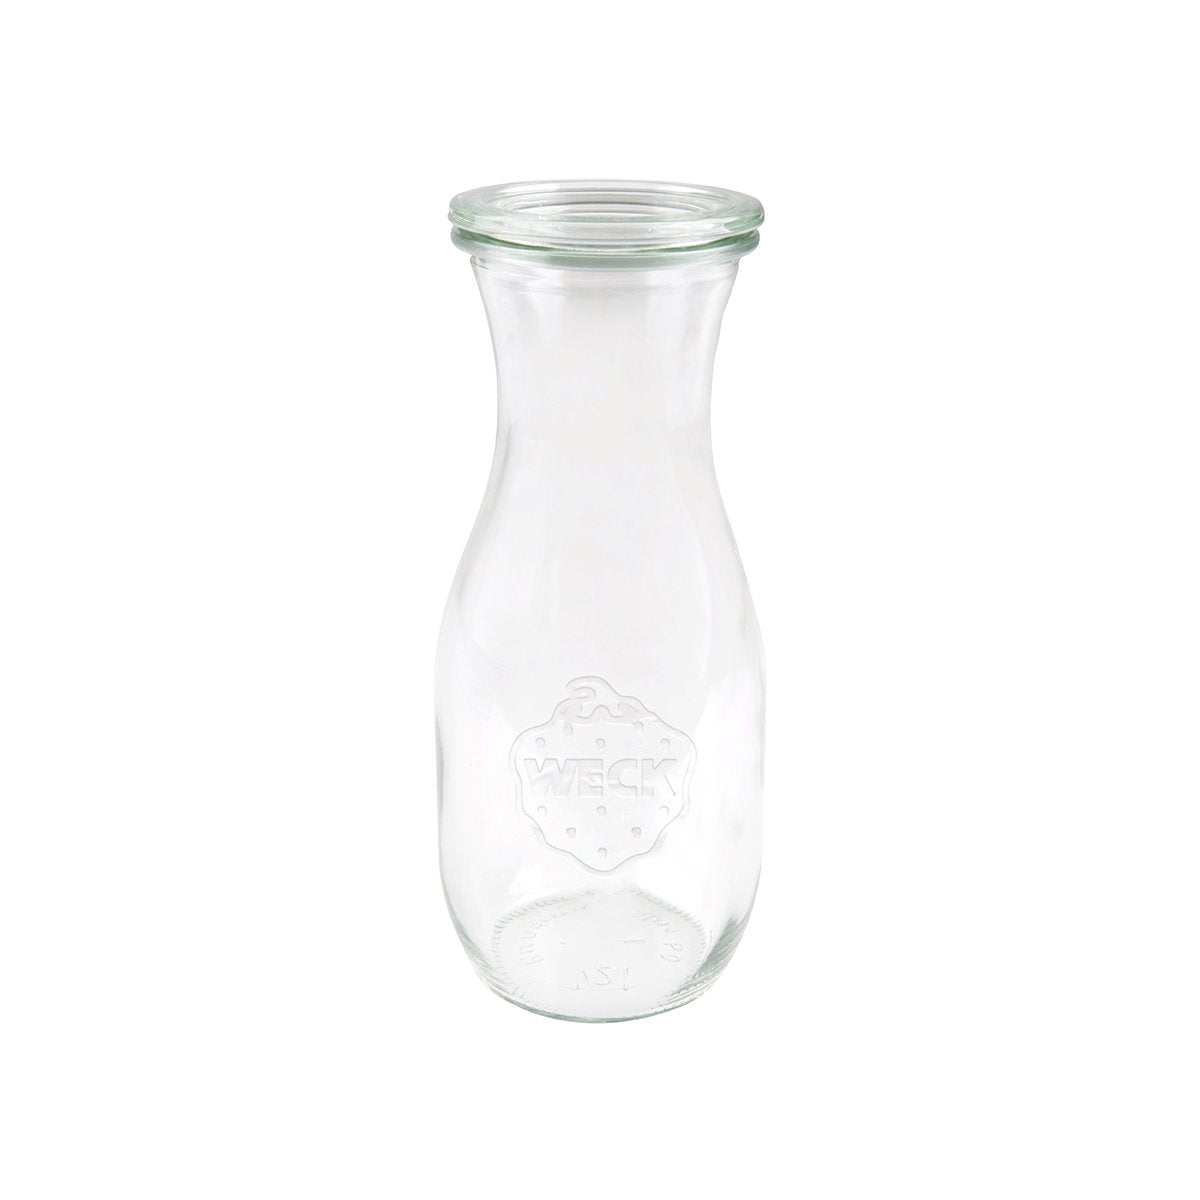 82308 Weck Bottle Jar with Lid 60x184mm / 530ml Tomkin Australia Hospitality Supplies